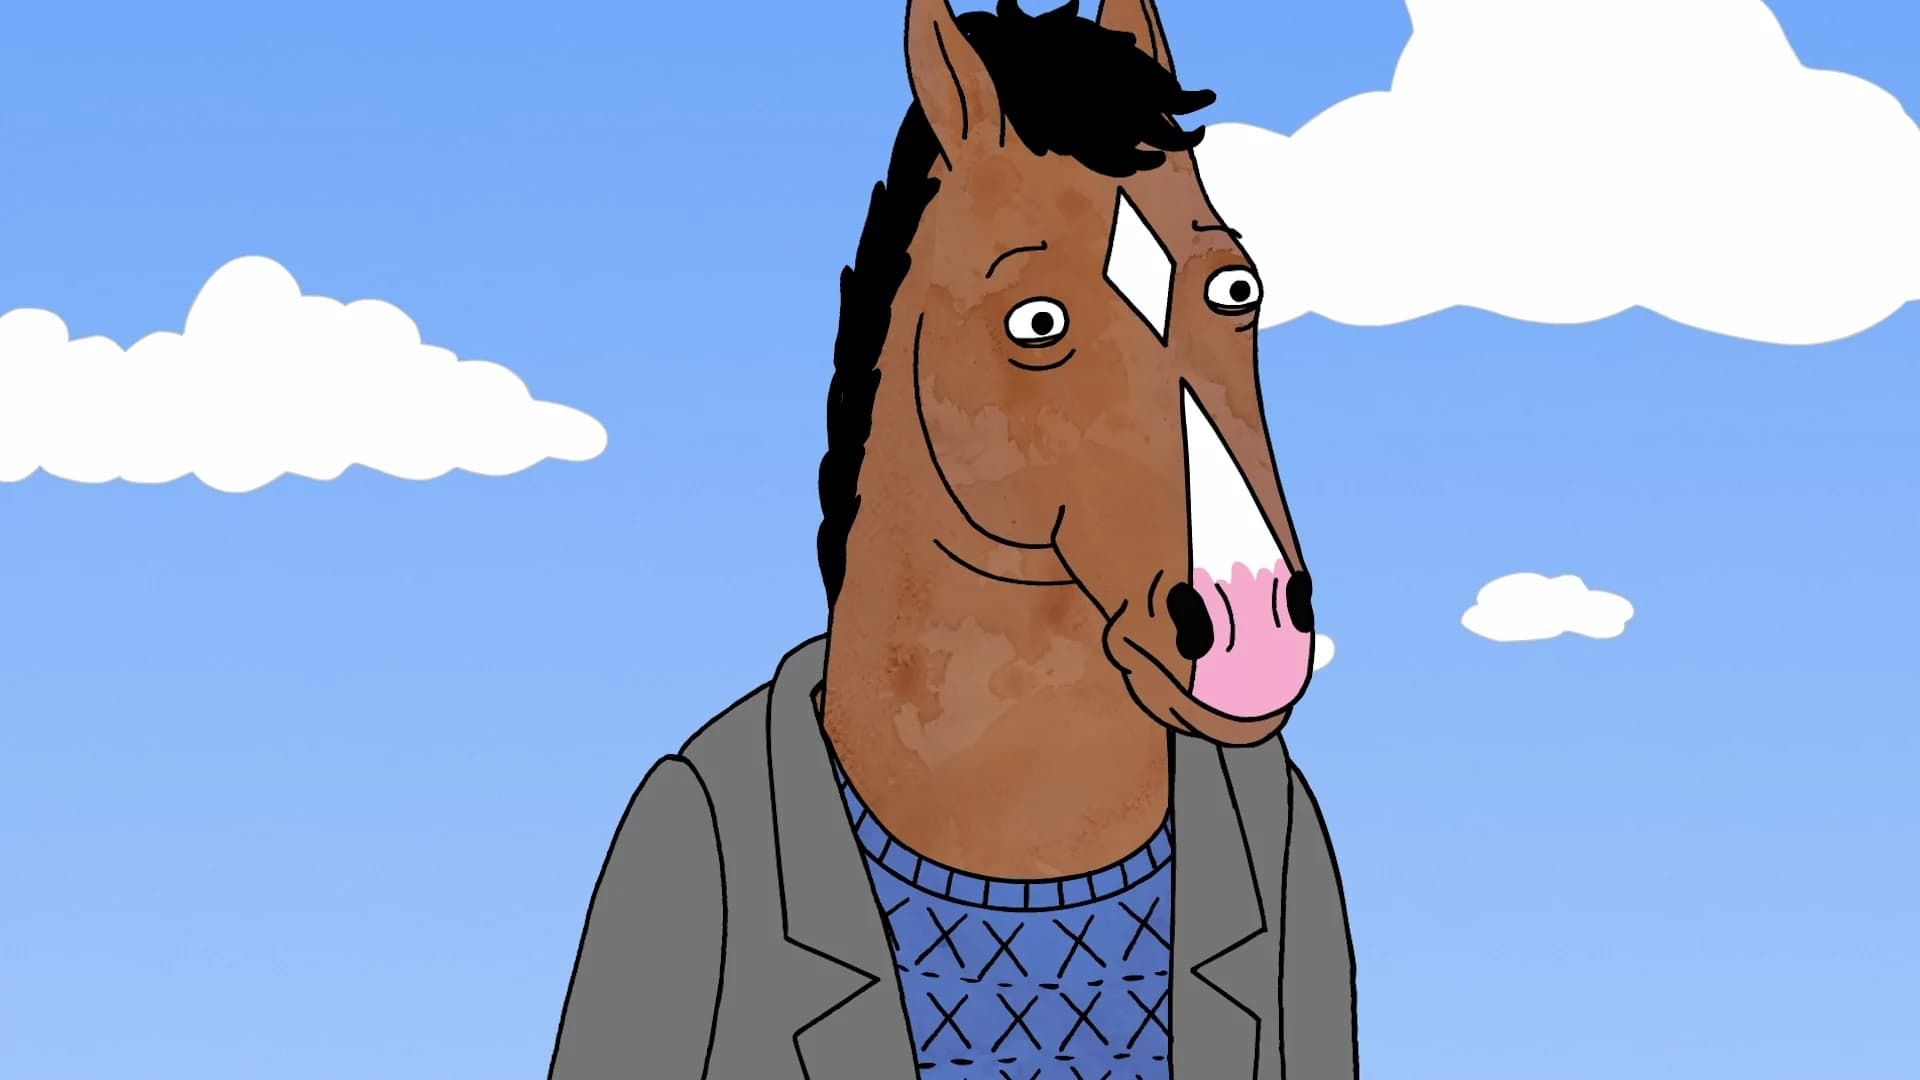 BoJack Horseman background